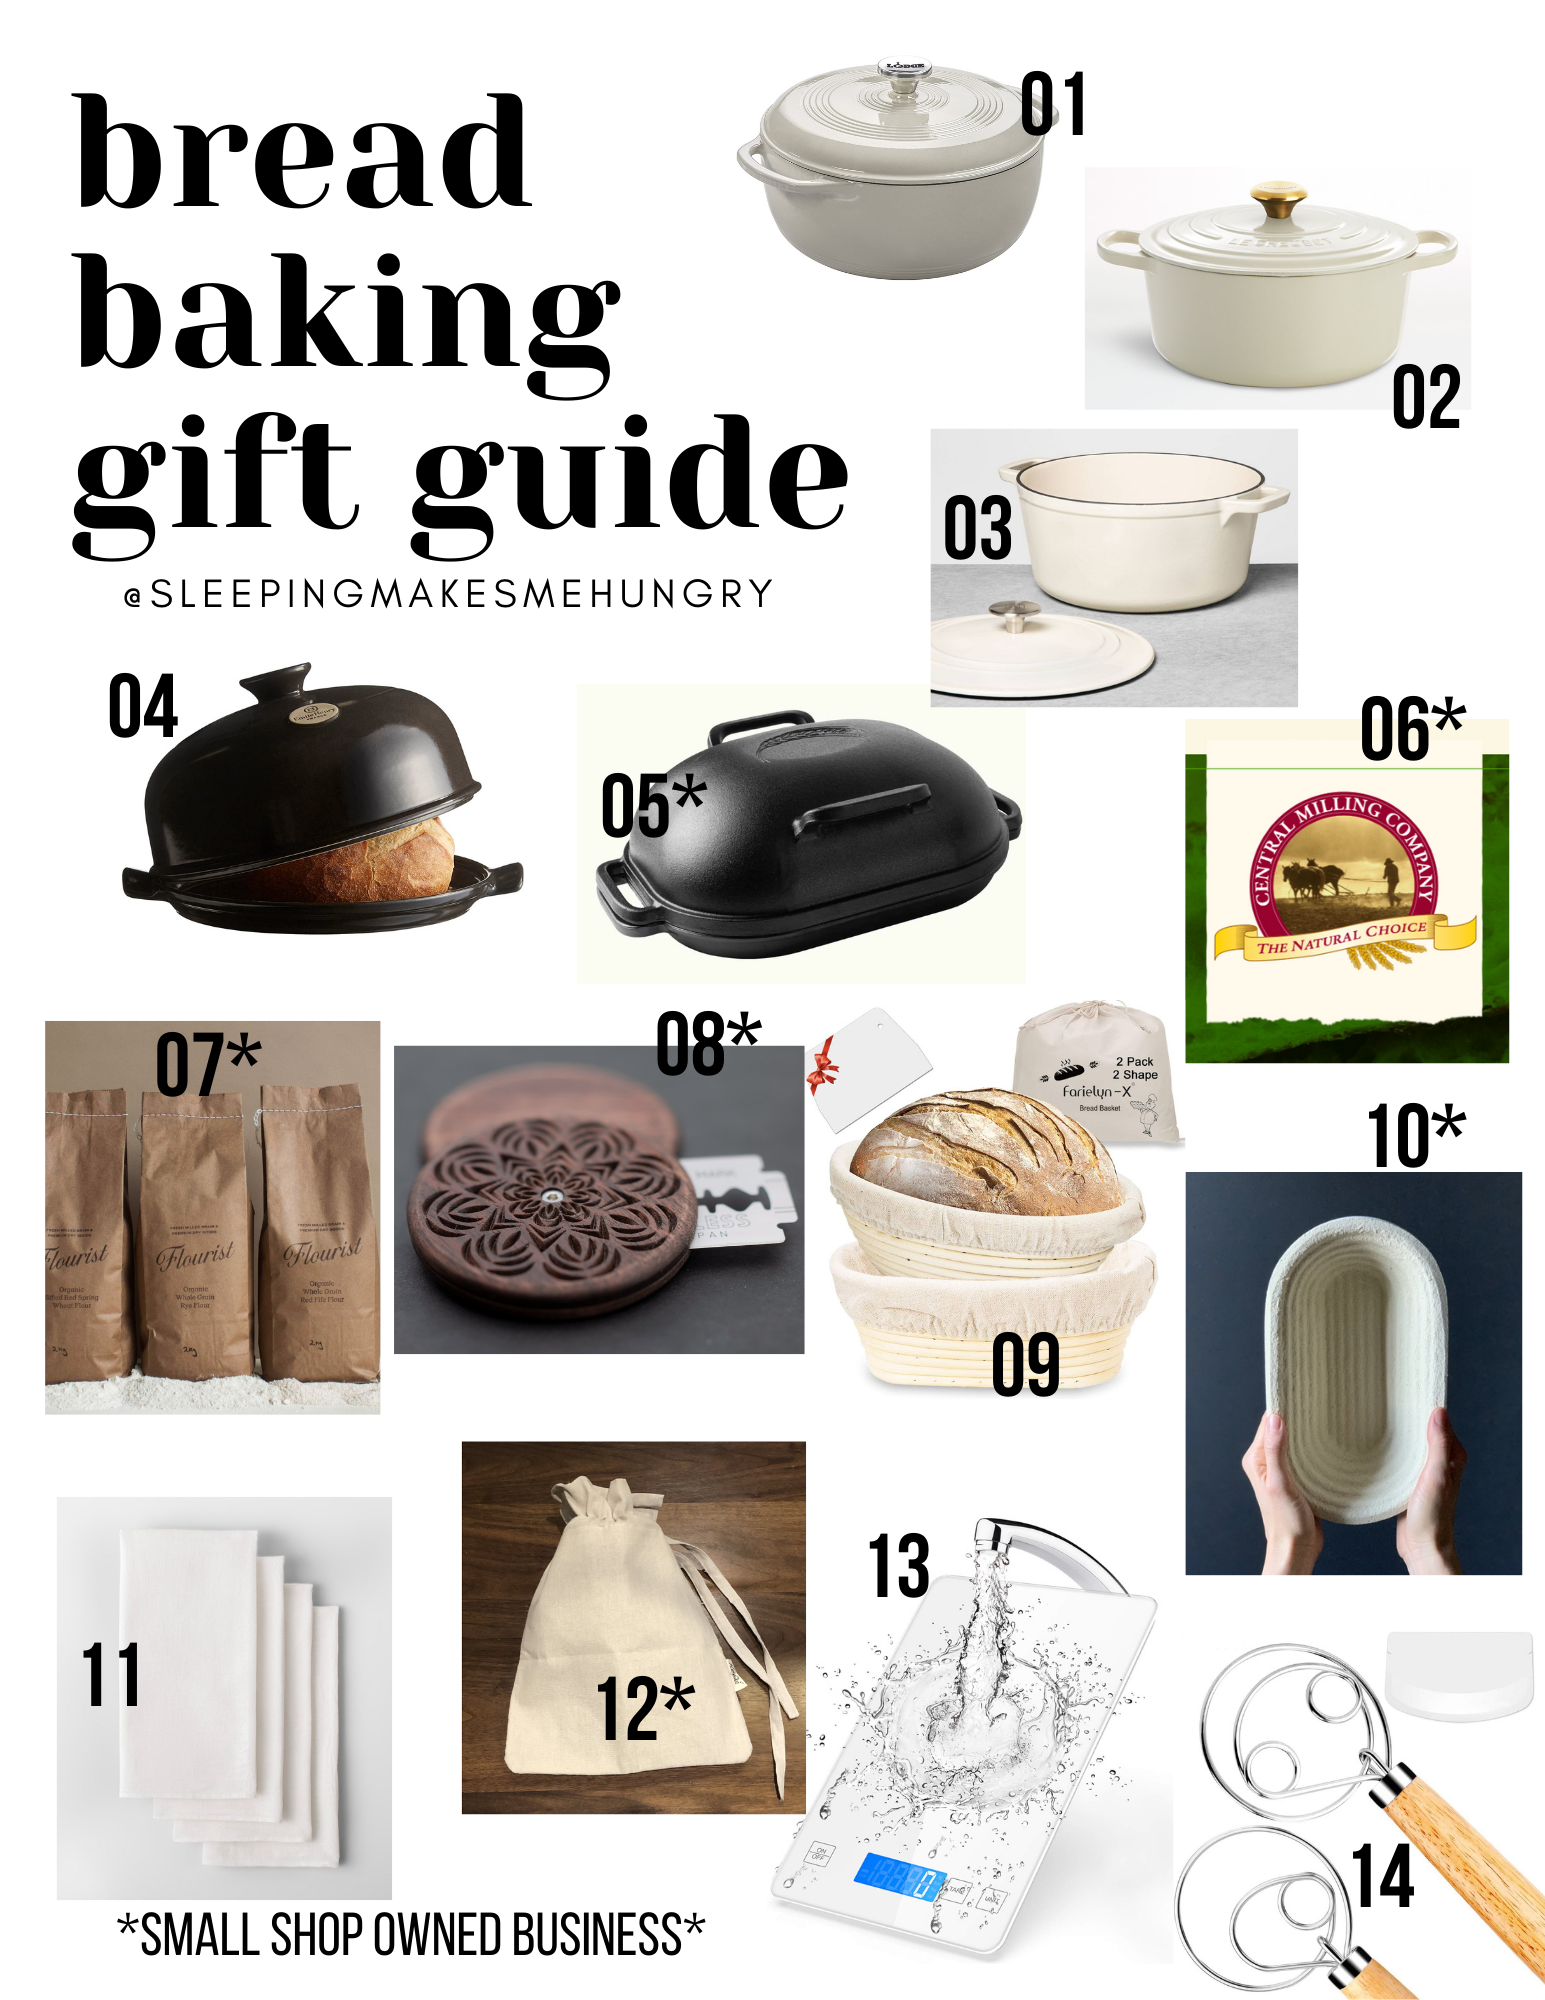 https://images.squarespace-cdn.com/content/v1/5e12b14f019b06239721d5ce/1605997679114-70IOQ7260PHO4XTKB0Y9/bread+baking+gift+guide